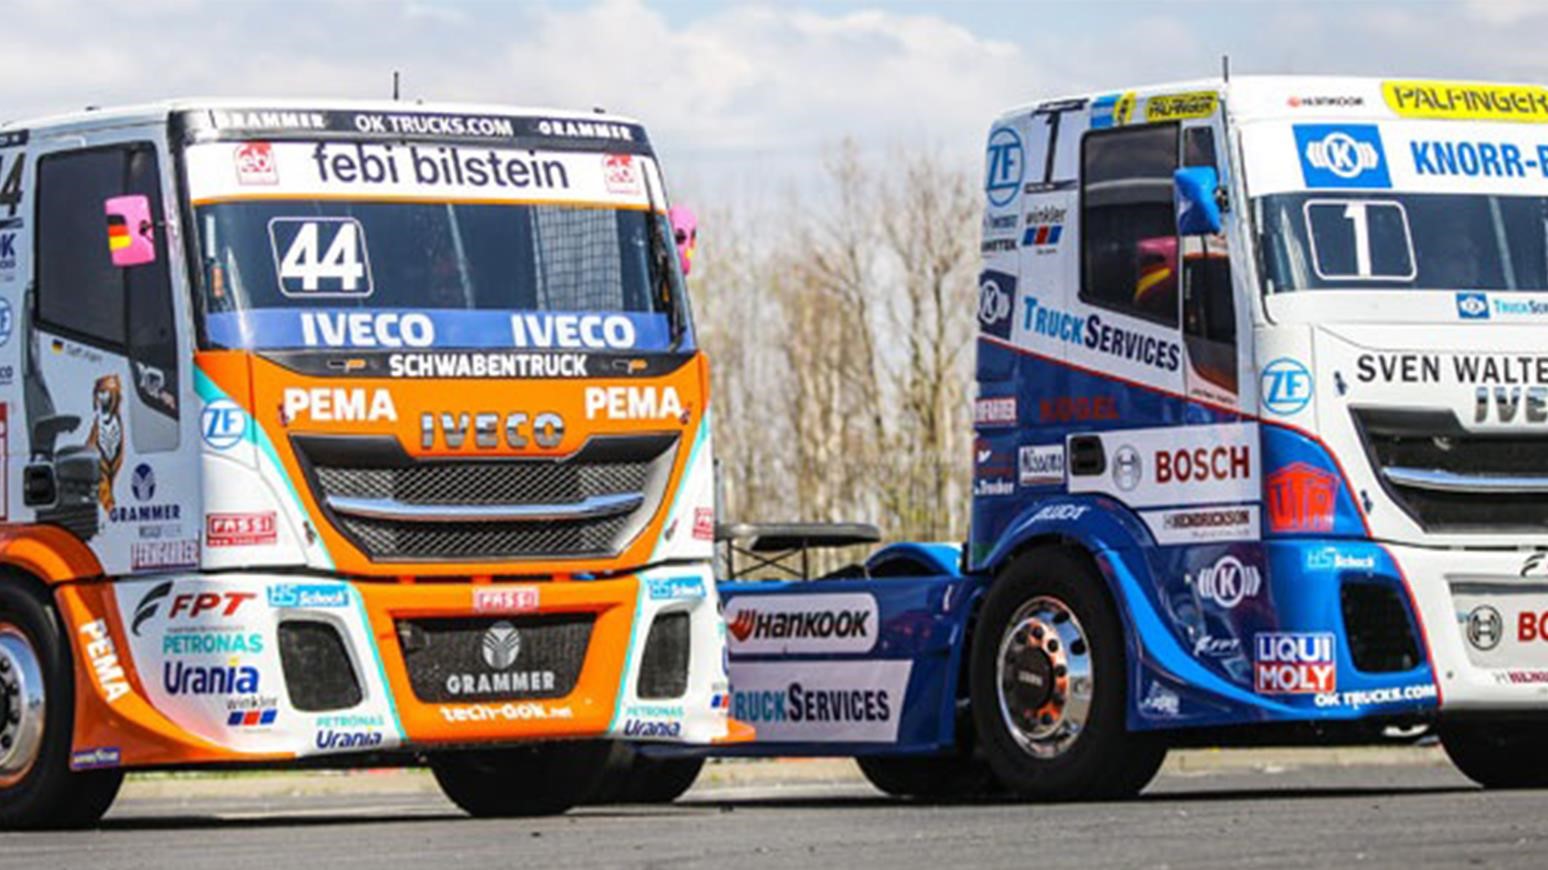 IVECO To Sponsor “Die Bullen von IVECO” Racing Team In The 2019 FIA European Truck Racing Championship